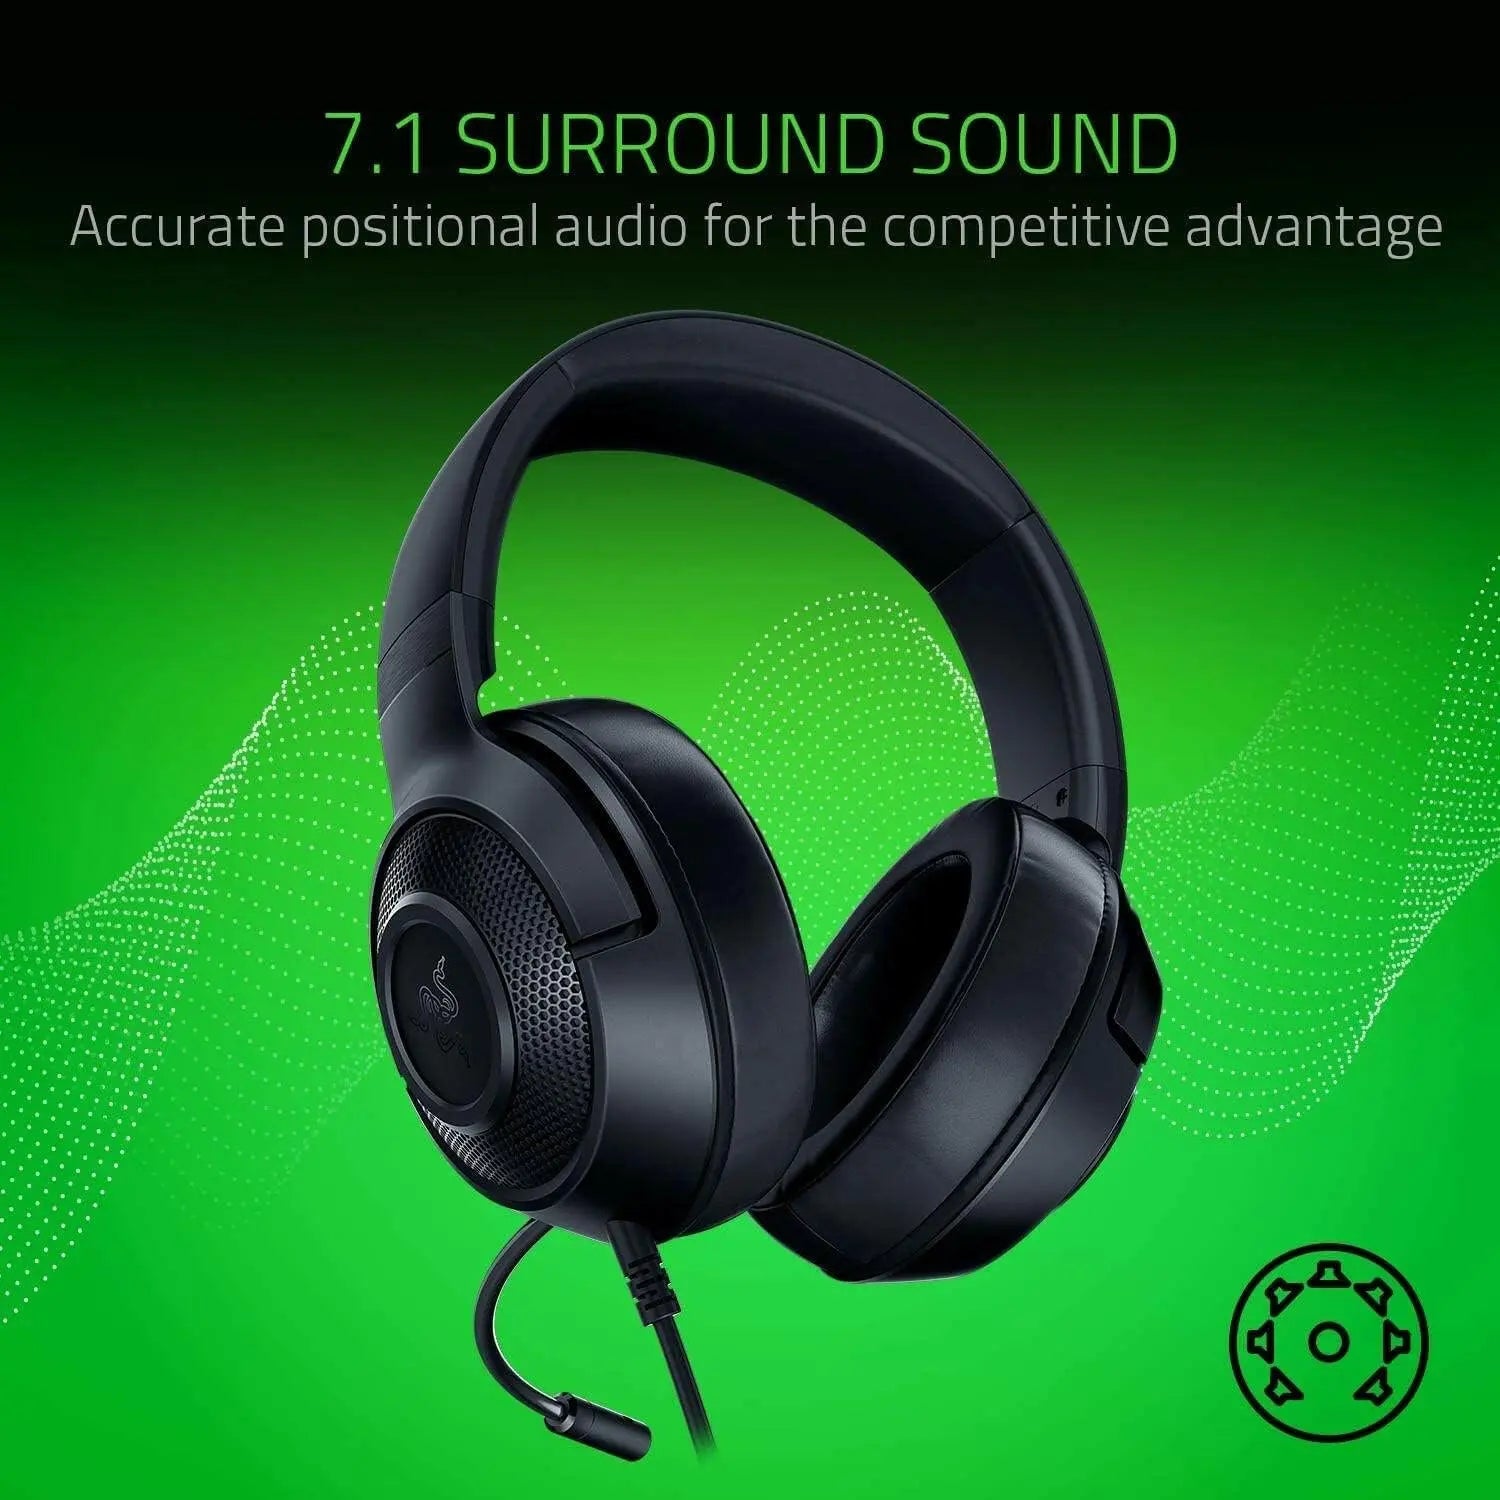 Razer Kraken X Lite Ultralight Gaming Headset: 7.1 Surround Sound - Lightweight Aluminum Frame - Bendable Cardioid Microphone - for PC